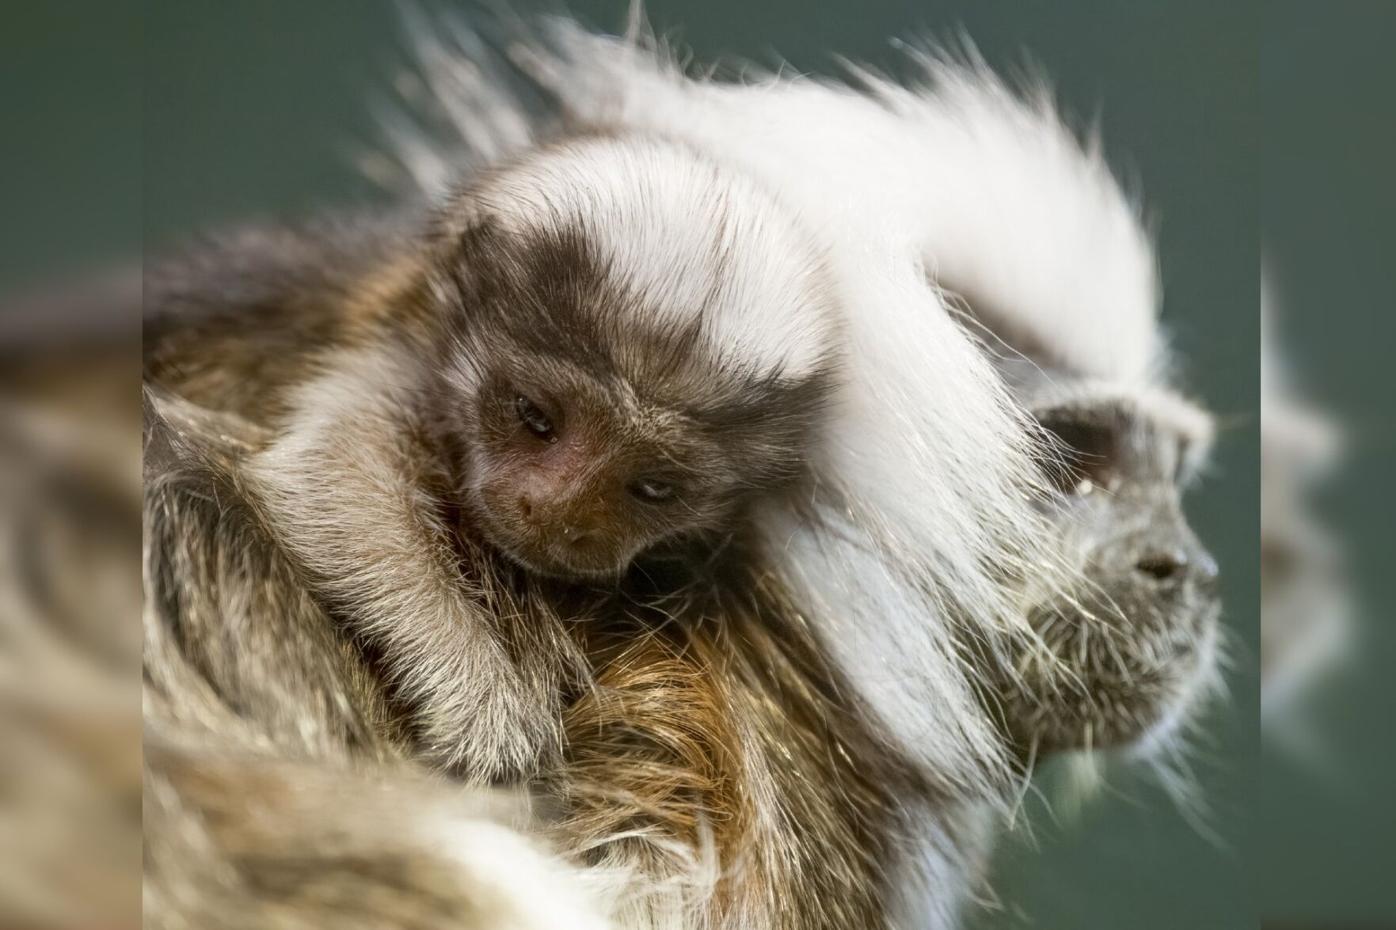 Nashville Zoo welcomes endangered cotton-top tamarin monkey